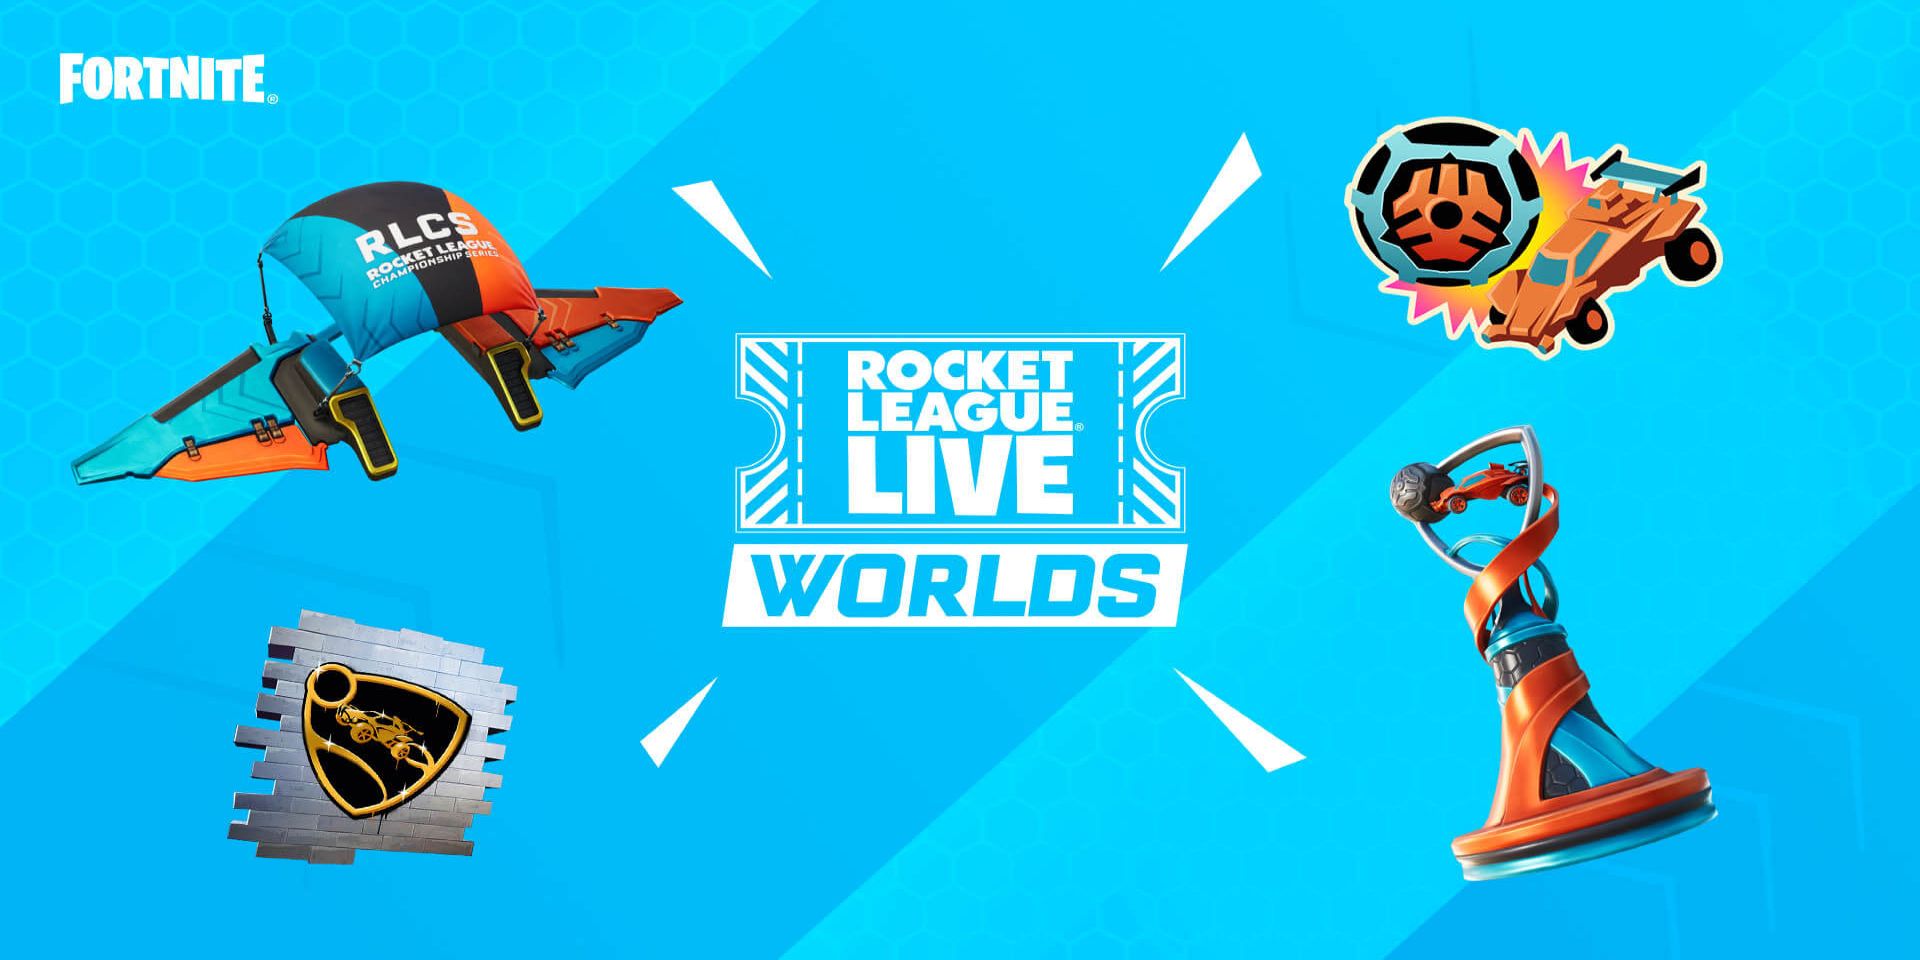 Fortnite Rocket League Live Worlds Event Guide